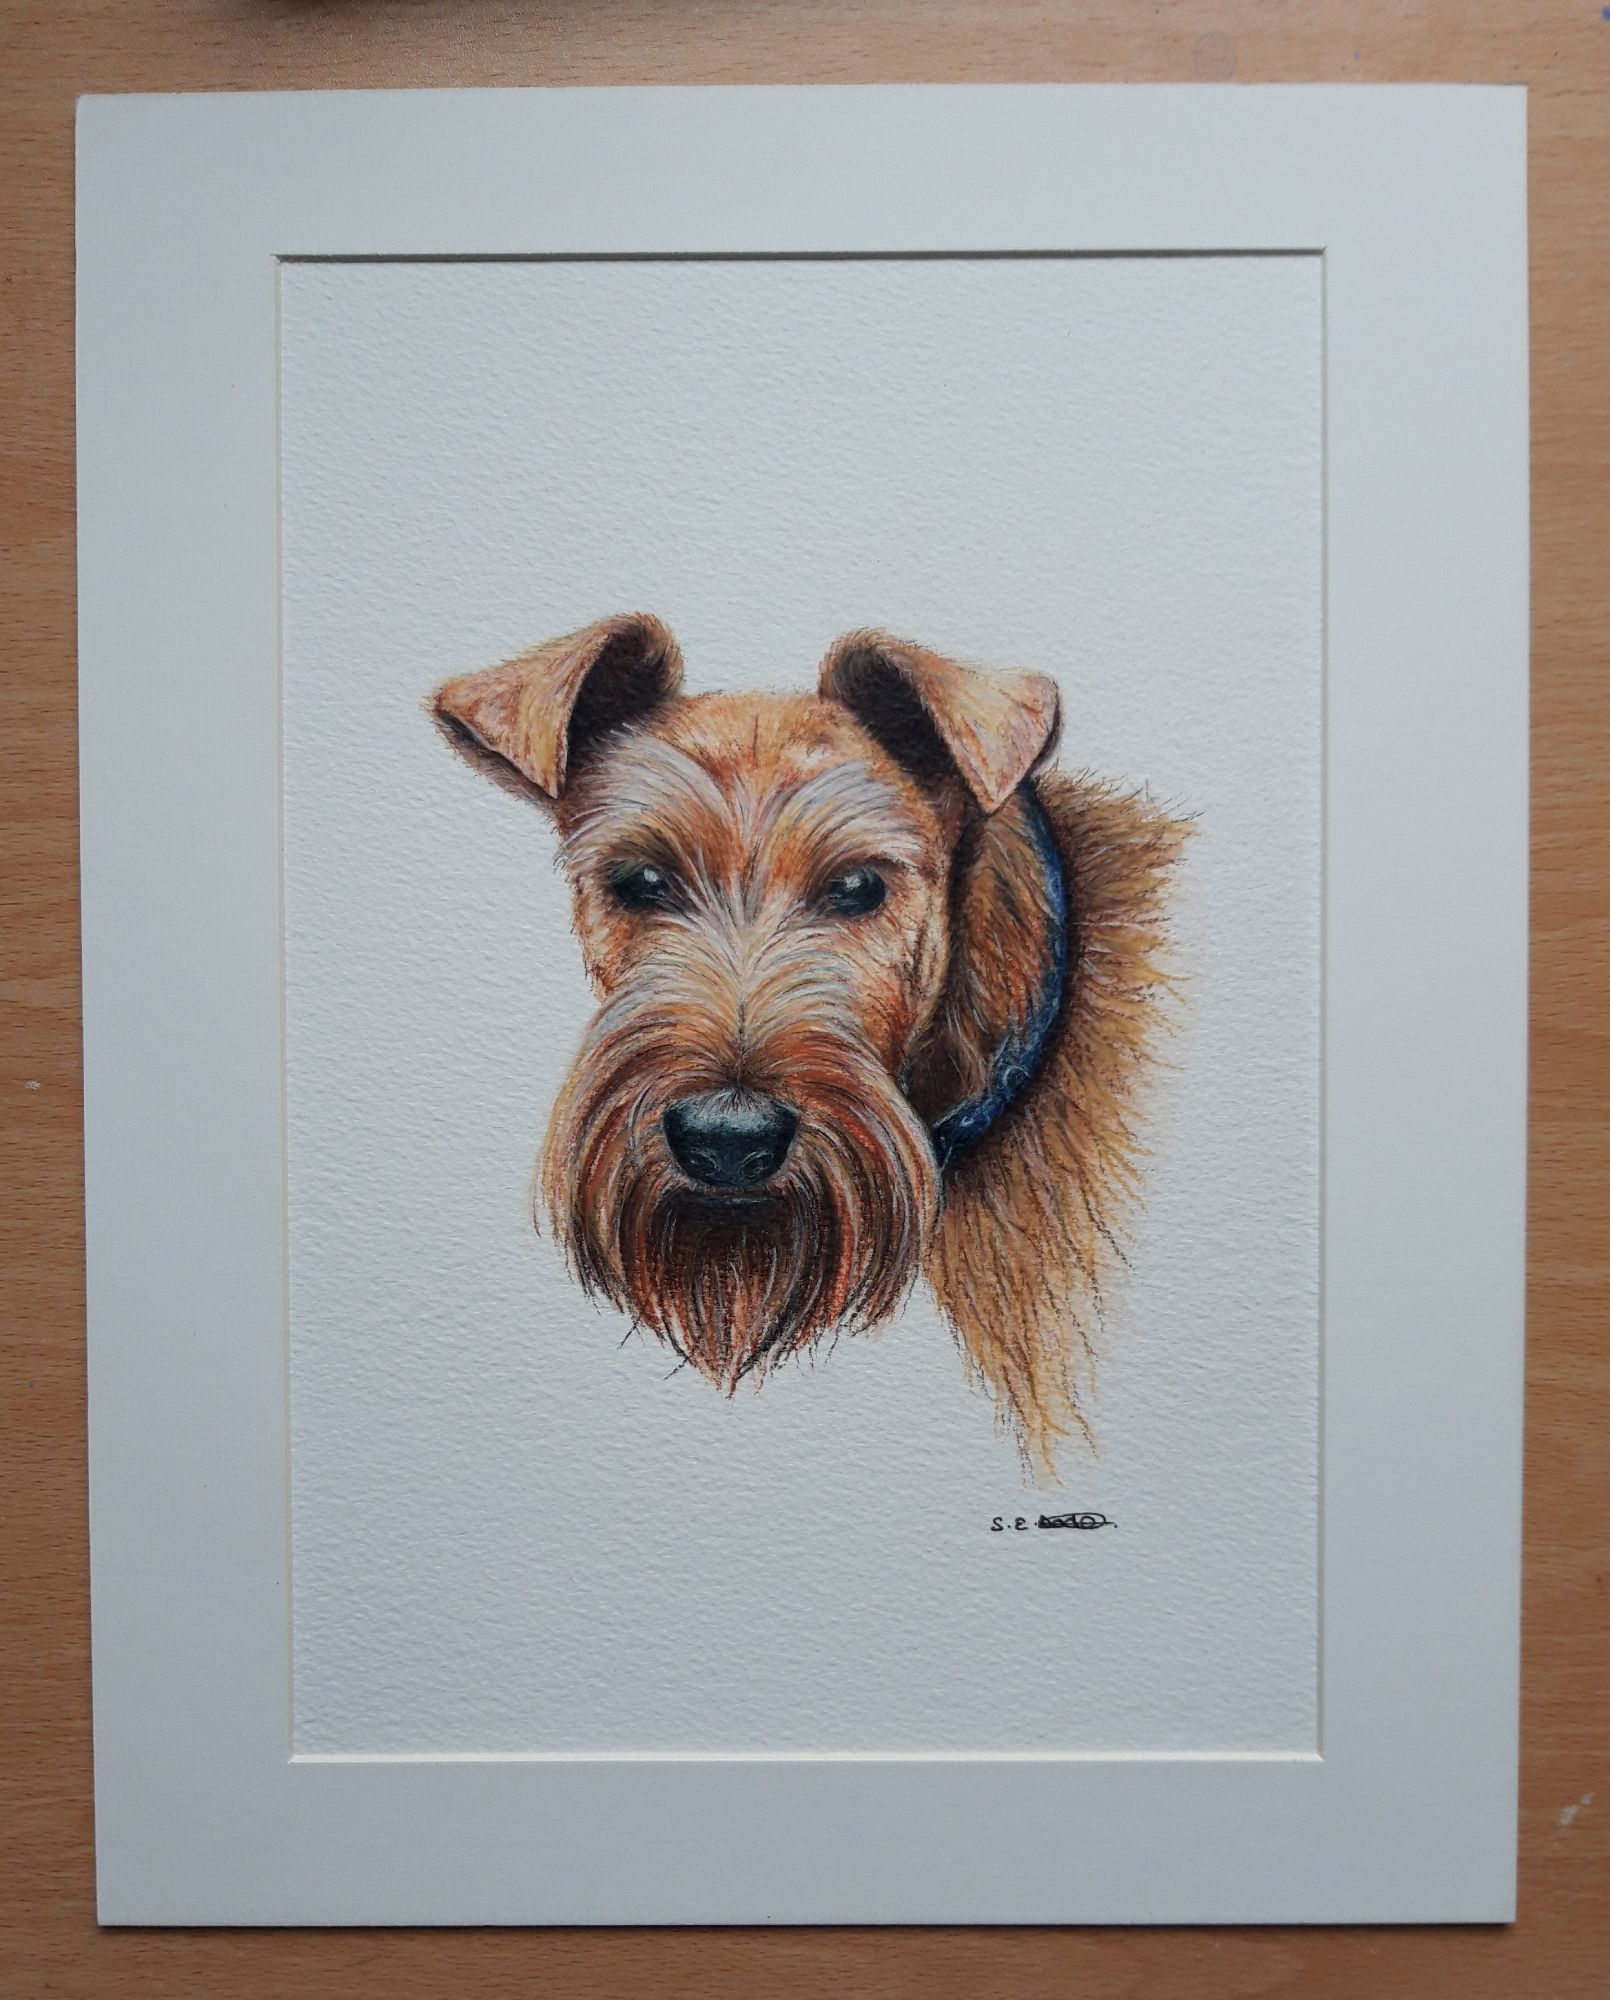 Portrait in watercolour pencils of a gorgeous dog